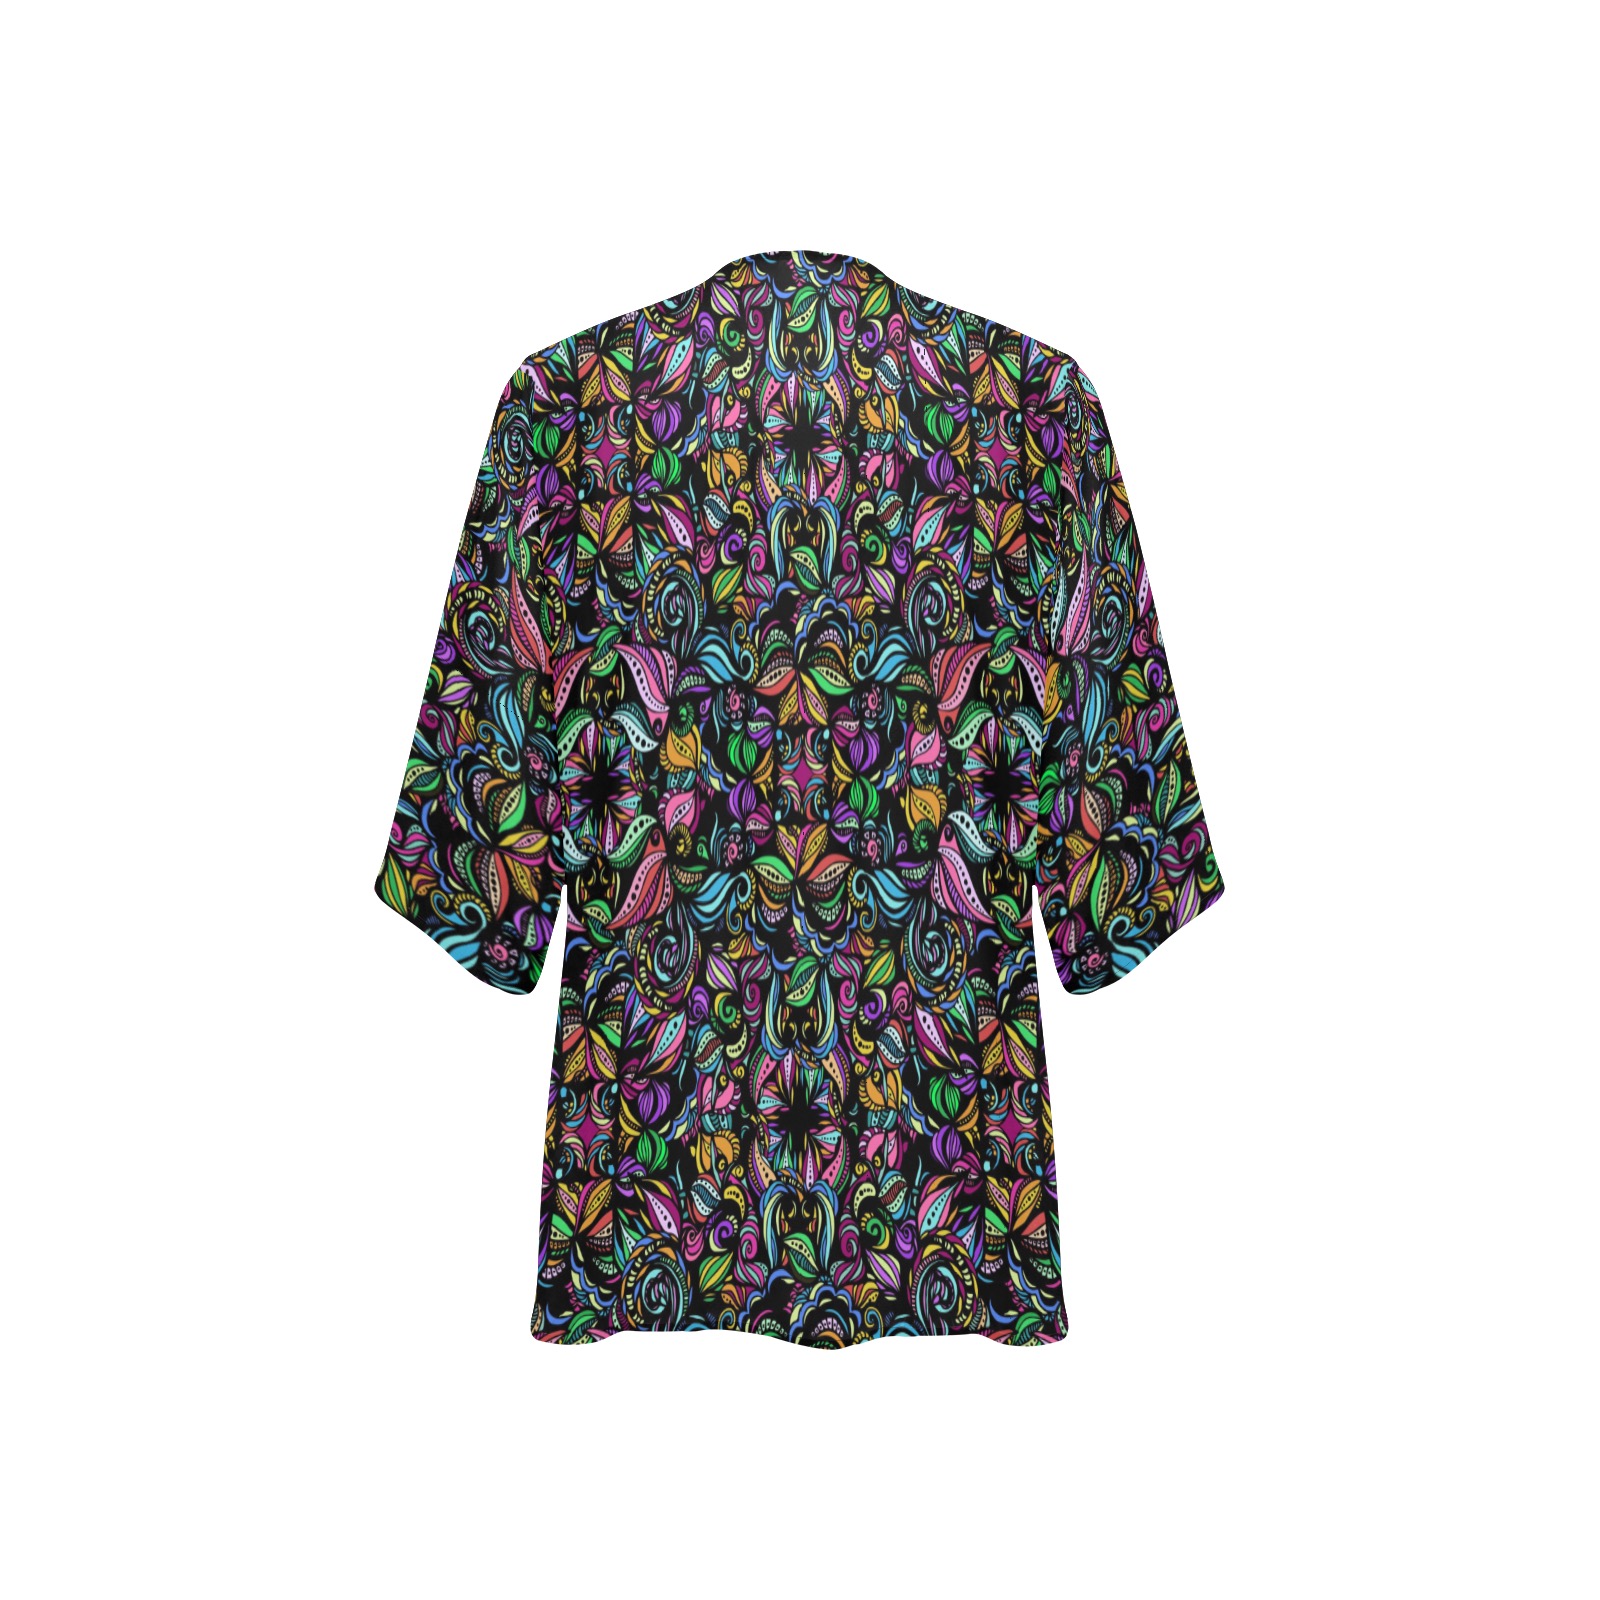 Whimsical Blooms (revised) Women's Kimono Chiffon Cover Ups (Model H51)